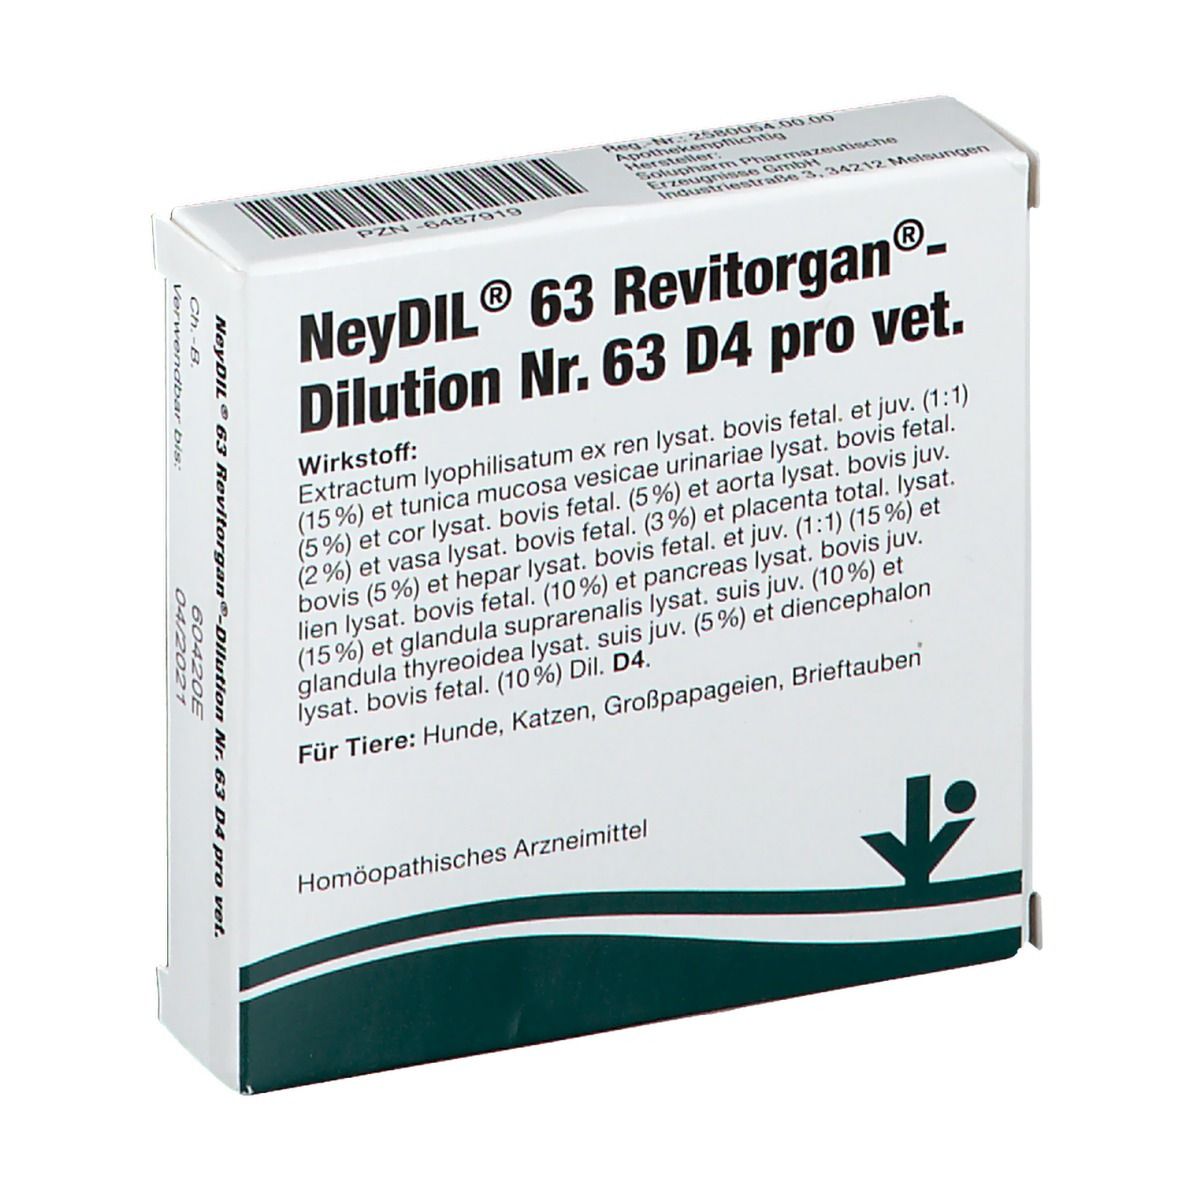 NeyDil® 63 Revitorgan® Dilution